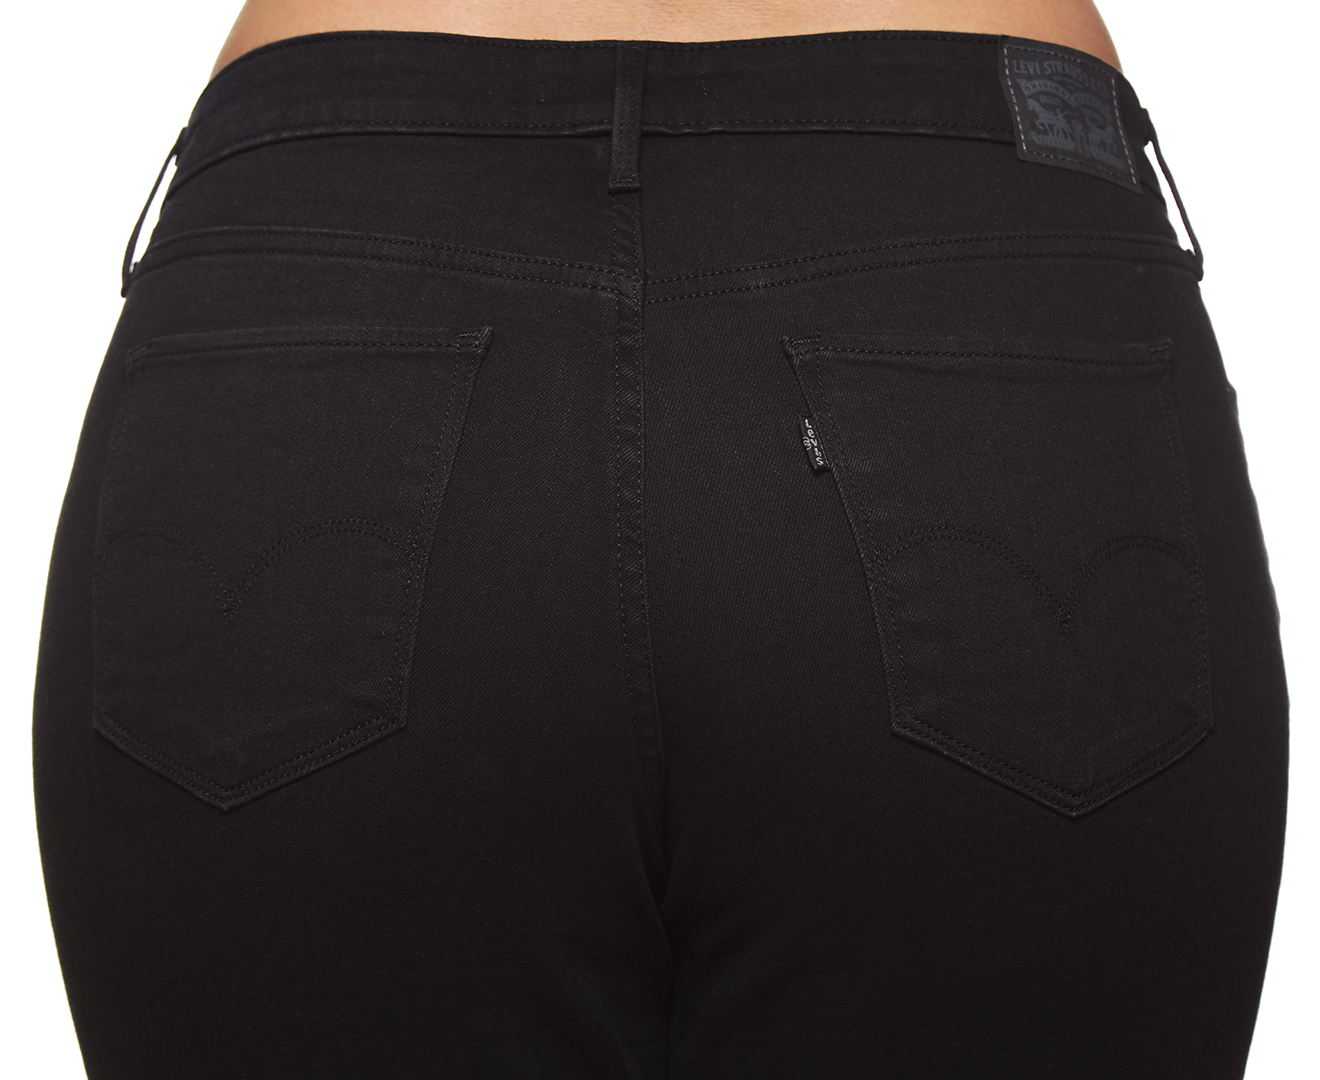 Levi's Women's Plus Size 311 Shaping Skinny Jeans Soft Black Catch